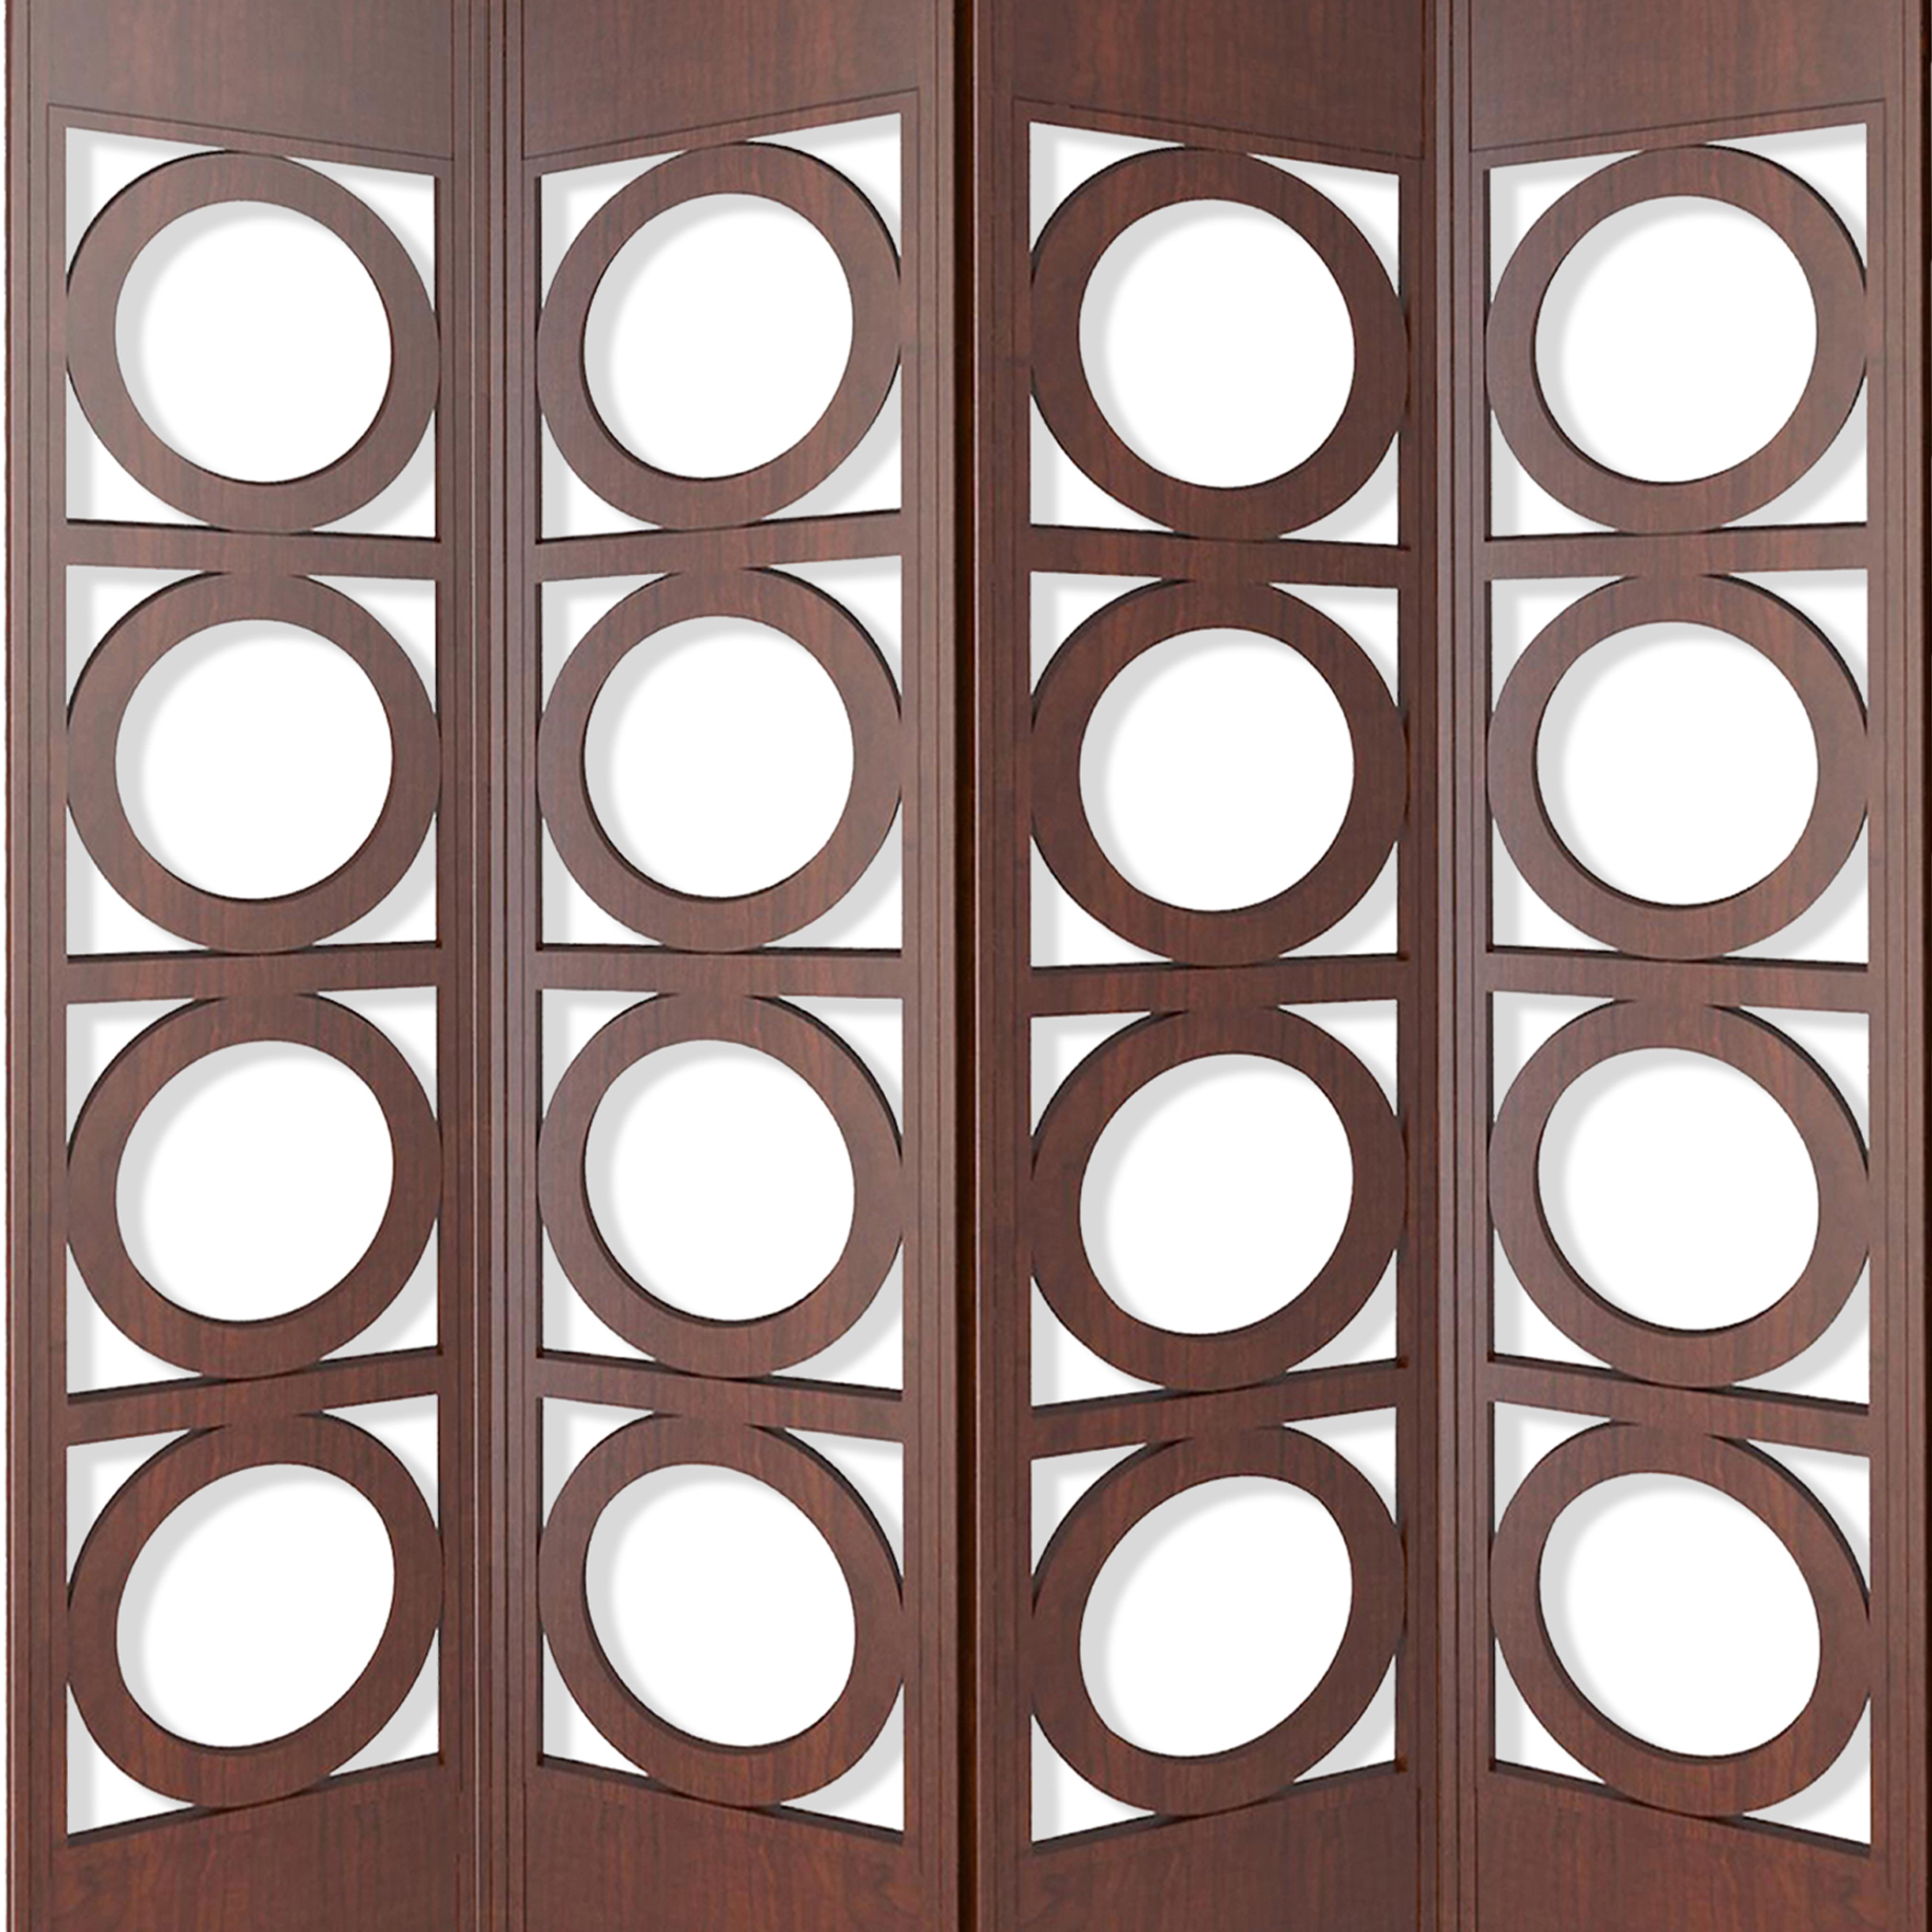 Transitional 4 Panel Wood Screen With Abstract Circular Design, Brown- Saltoro Sherpi